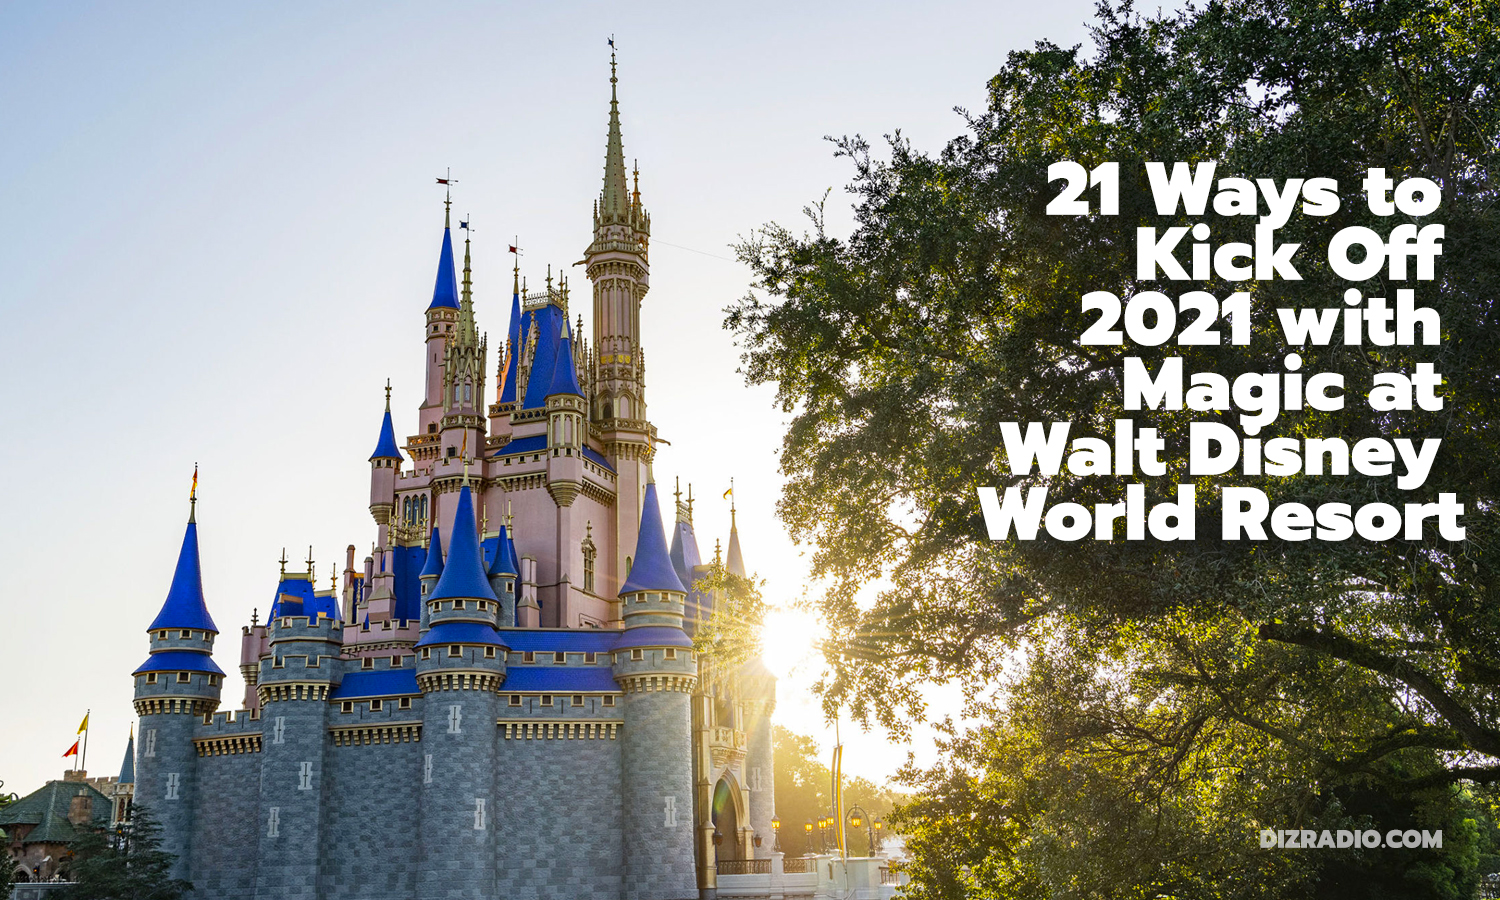 21 Ways to Kick Off 2021 with Magic at Walt Disney World Resort